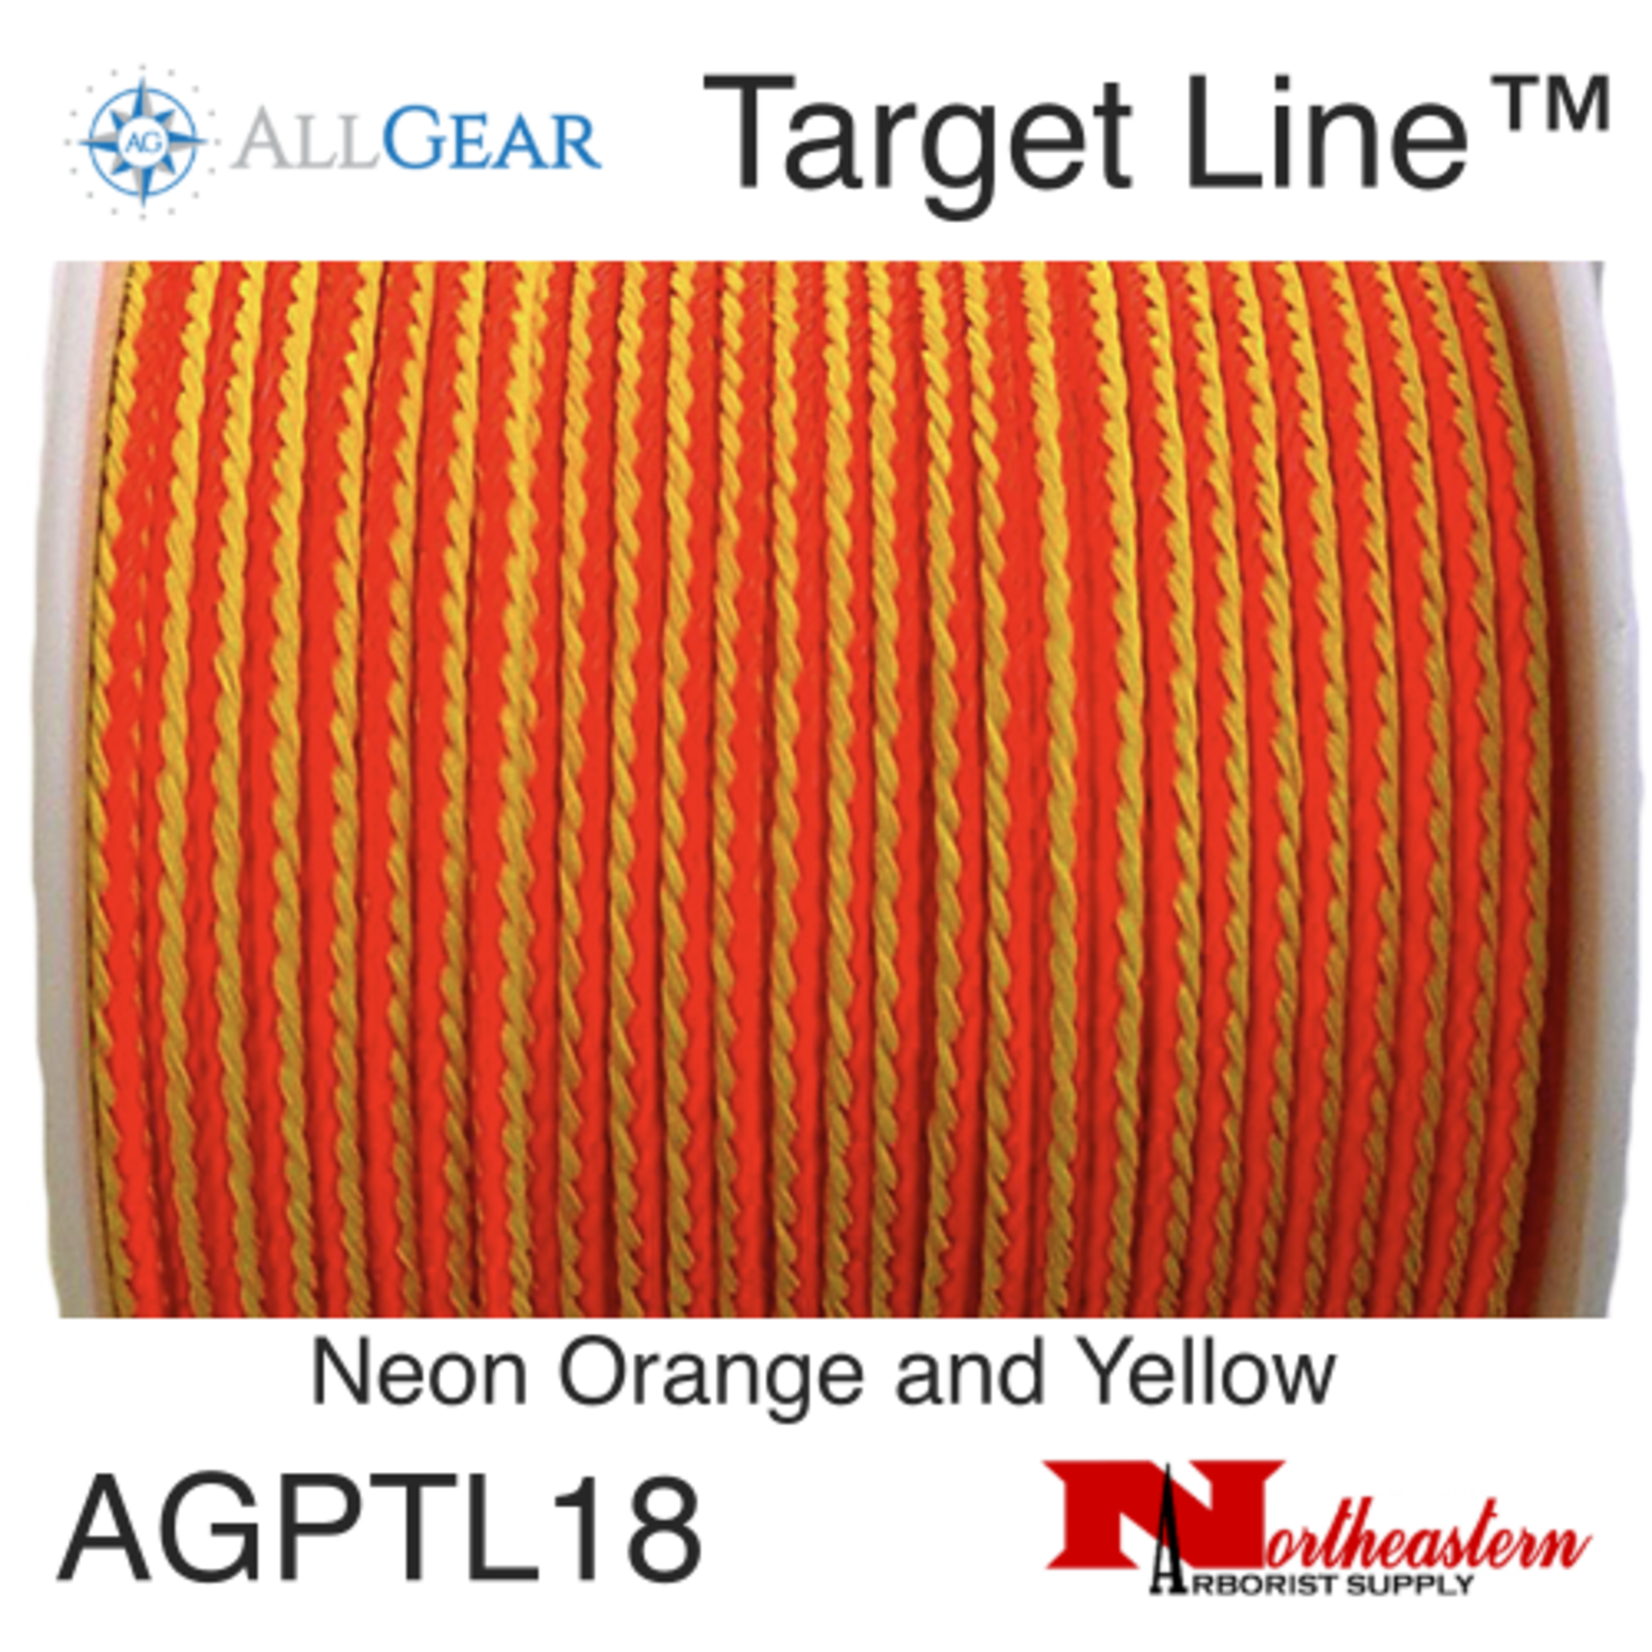 All Gear Inc. Target Line 1/8" x 200' Bright Yellow & Orange Braided Polyethylene Throw Line